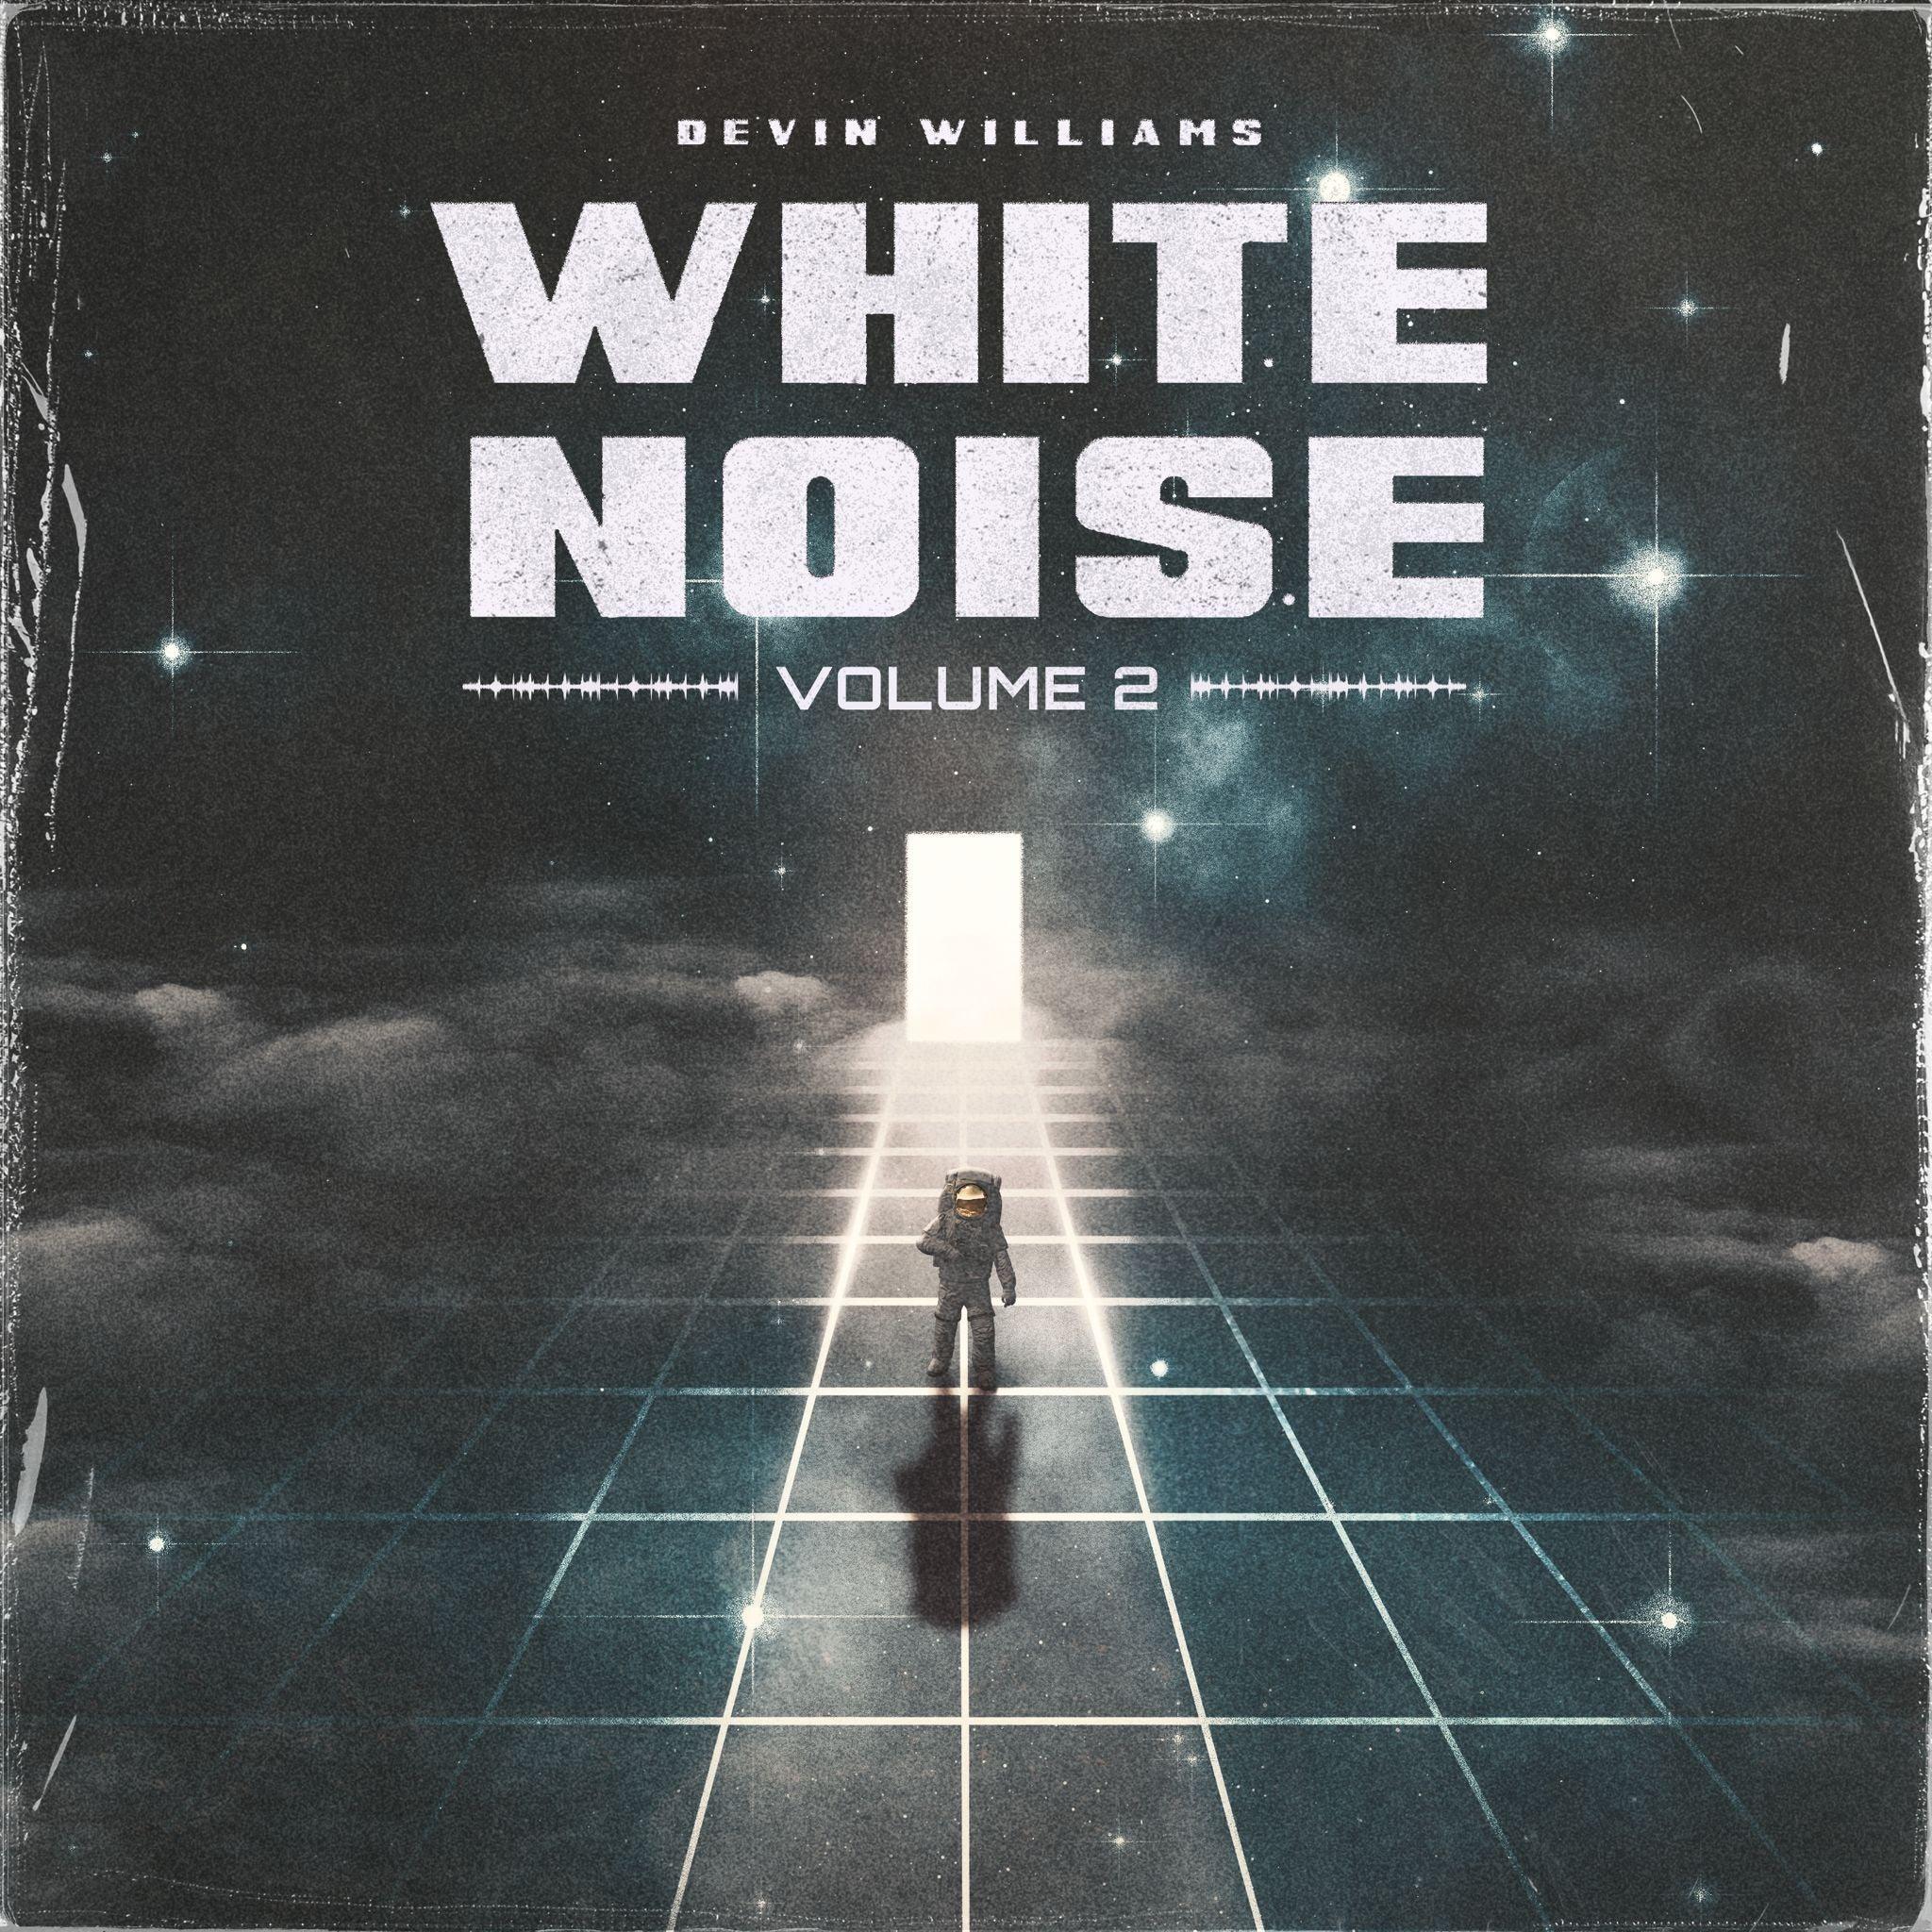 White Noise Volume 2 – The Sample Lab